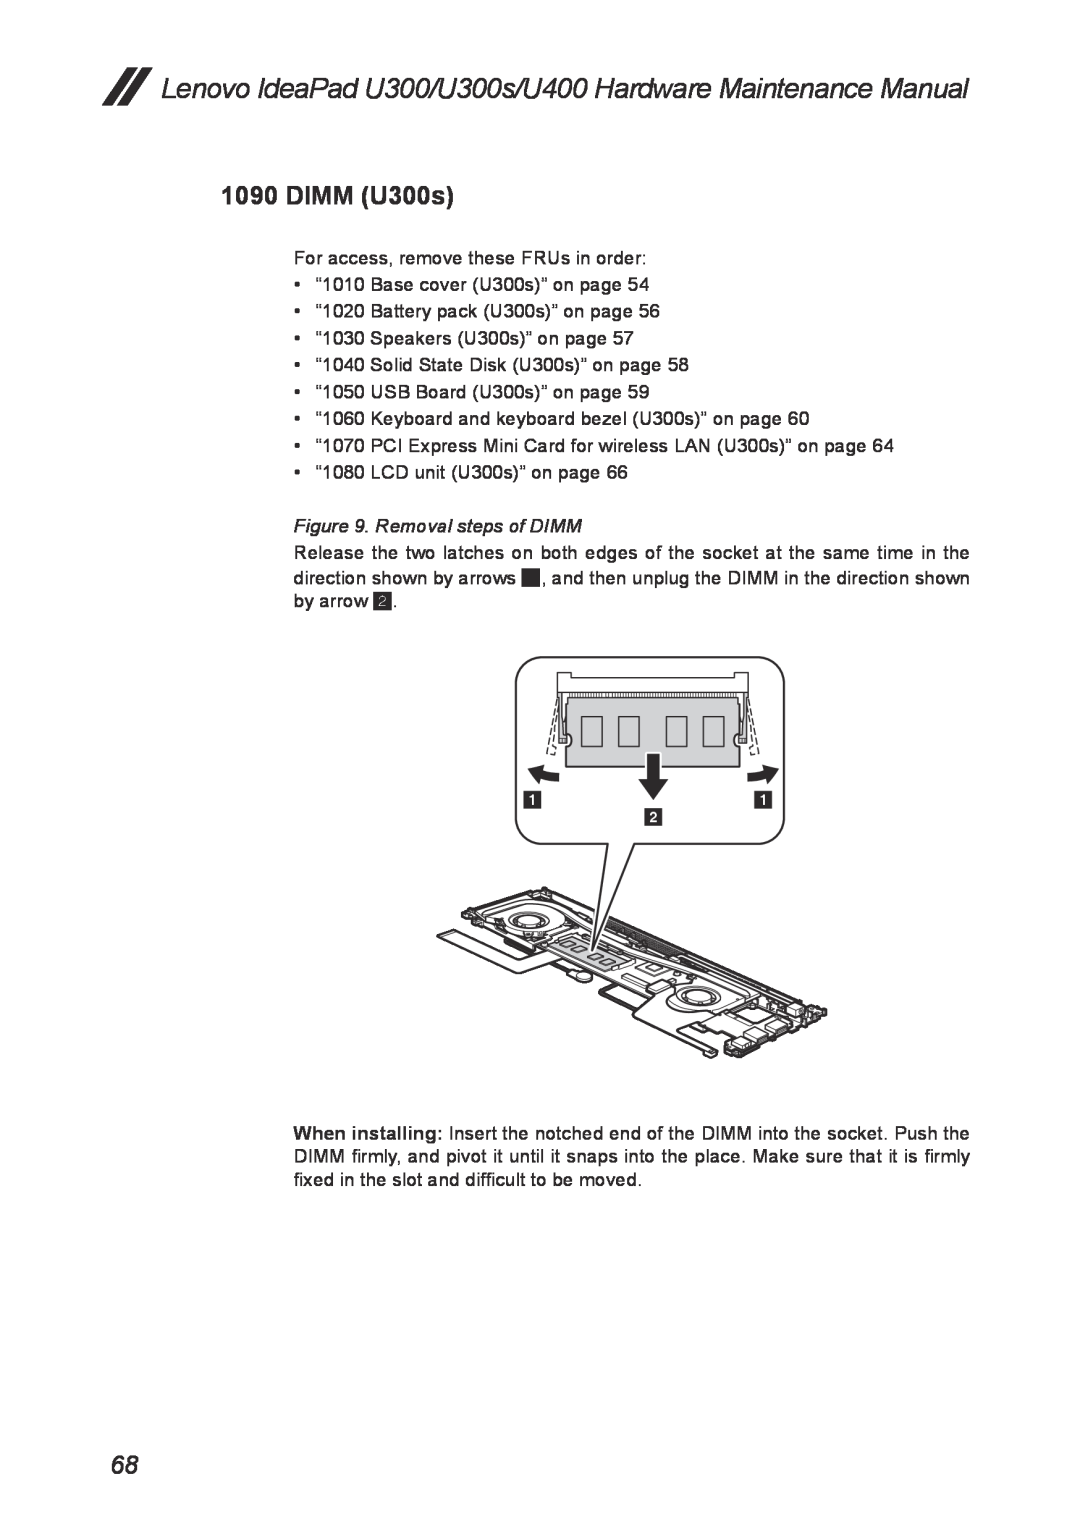 Lenovo U300S manual DIMM U300s, Removal steps of DIMM, Lenovo IdeaPad U300/U300s/U400 Hardware Maintenance Manual 